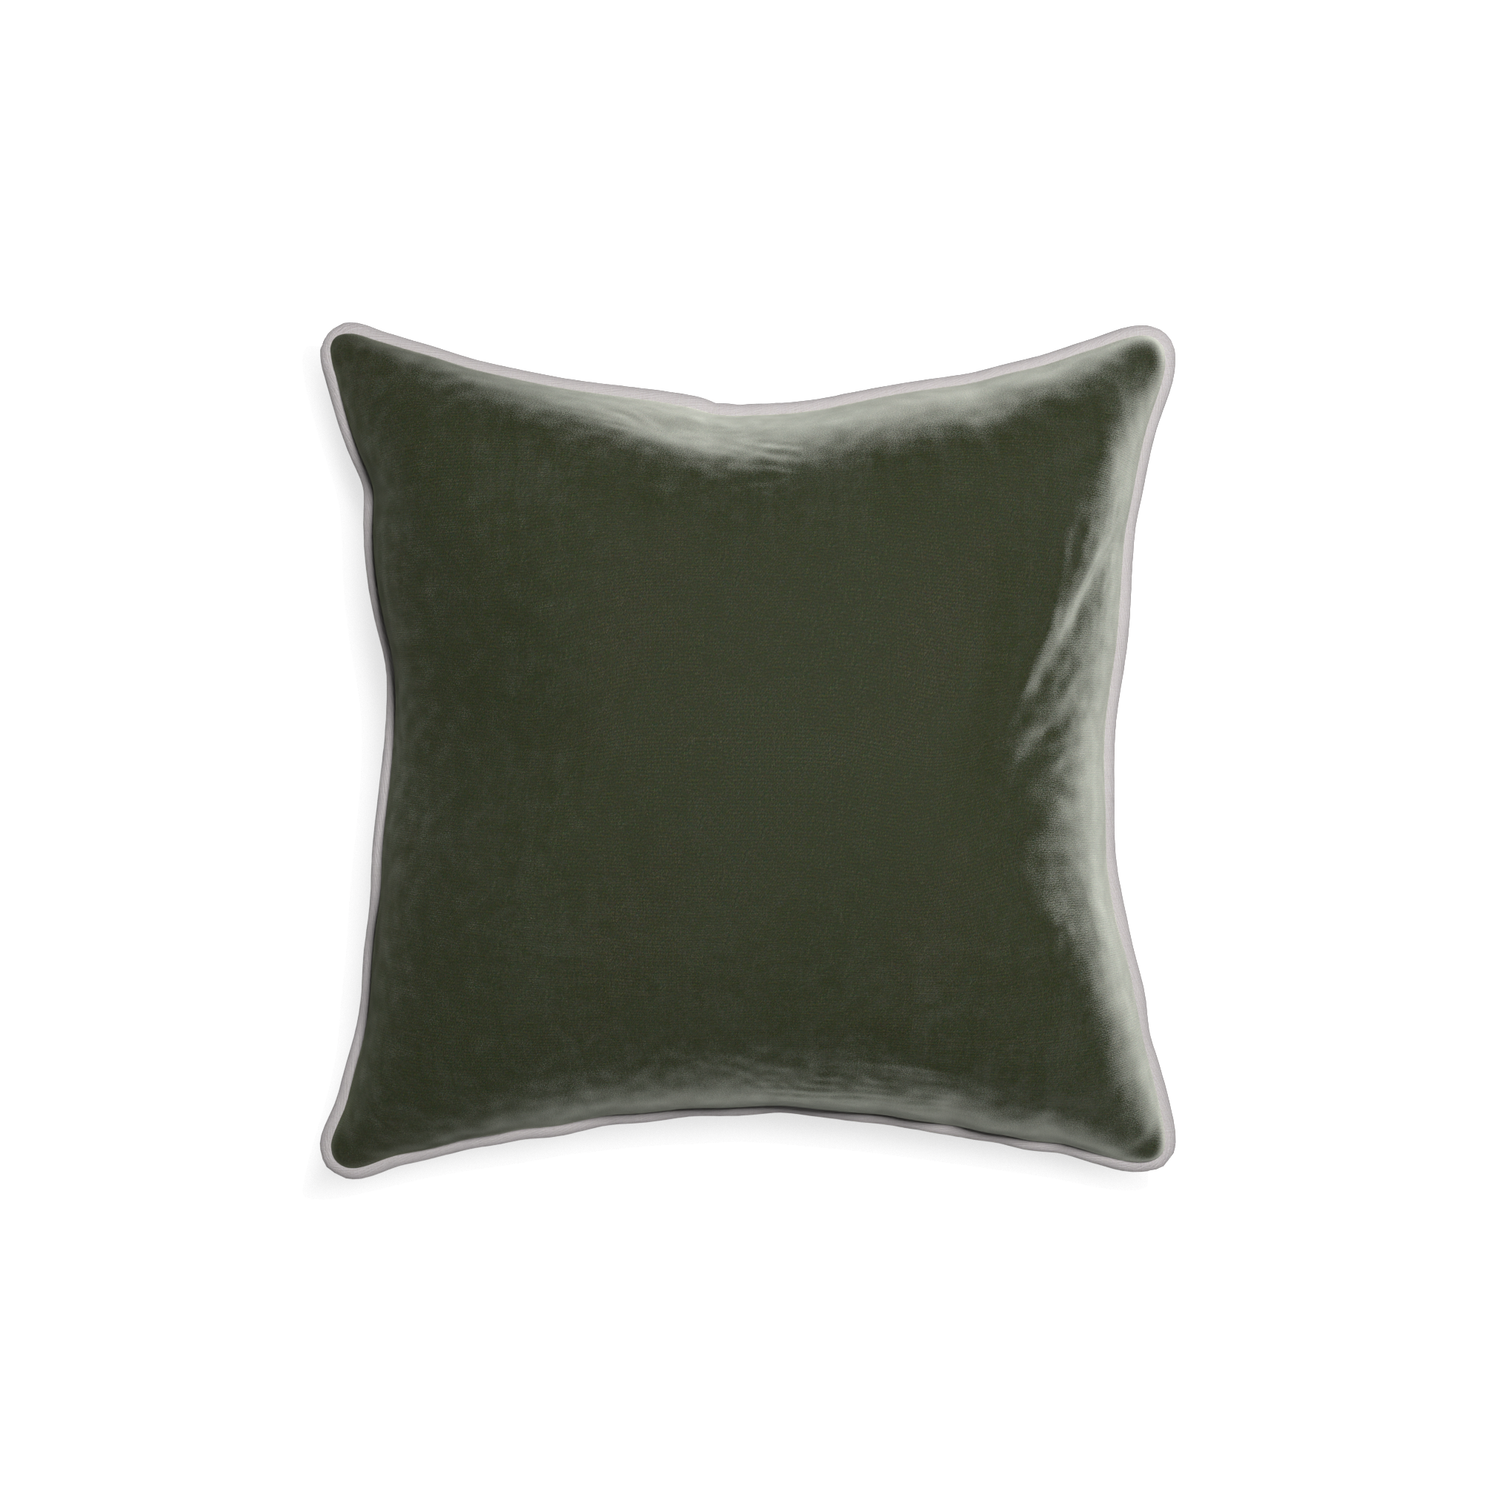 square fern green velvet pillow with light grey piping